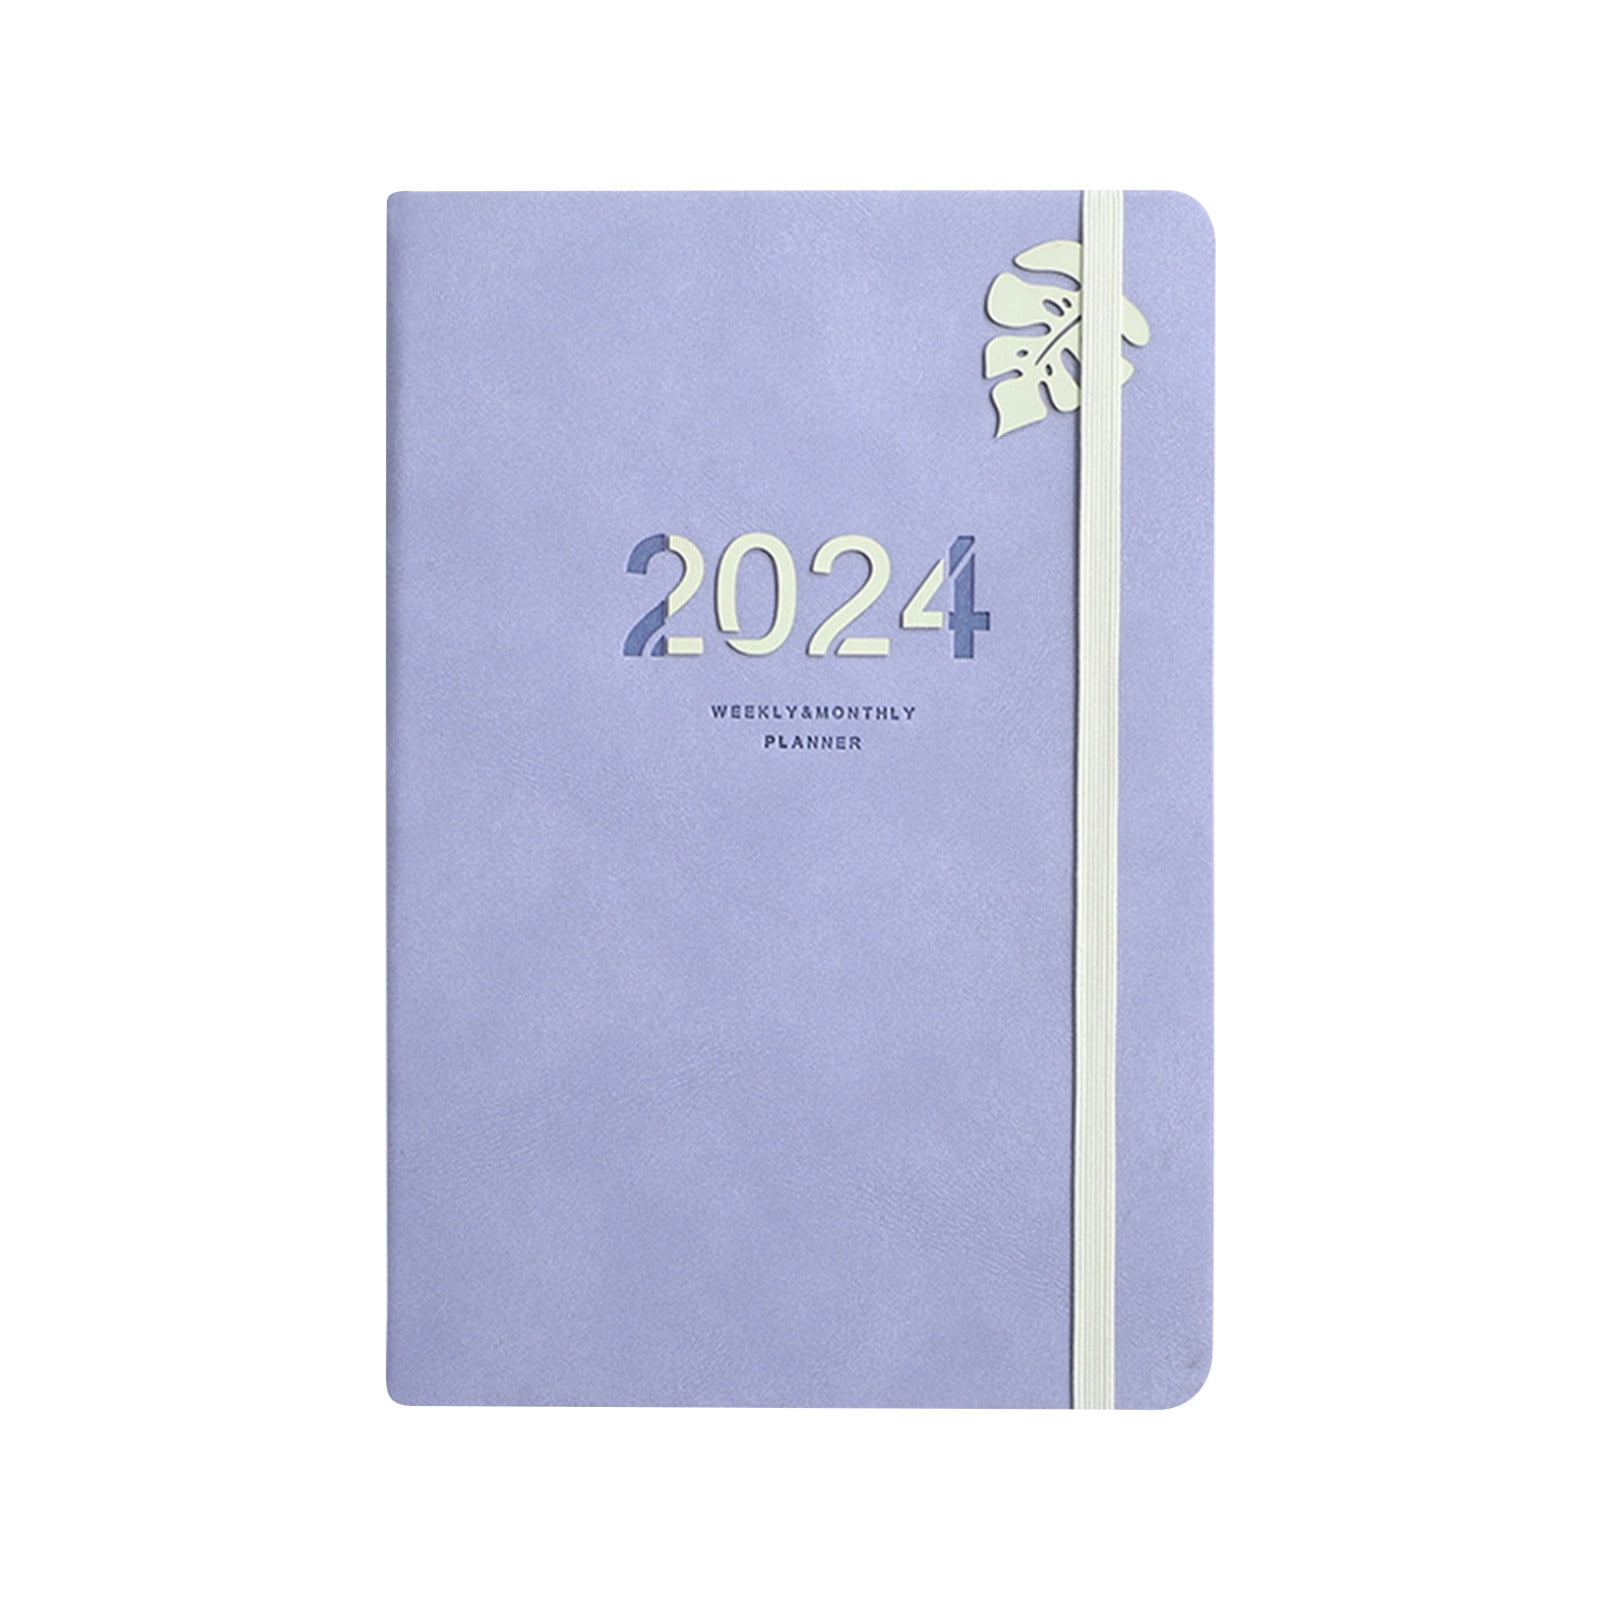 2024 Monthly Scrapbook Photo Album, Diary, Journal With Calendar